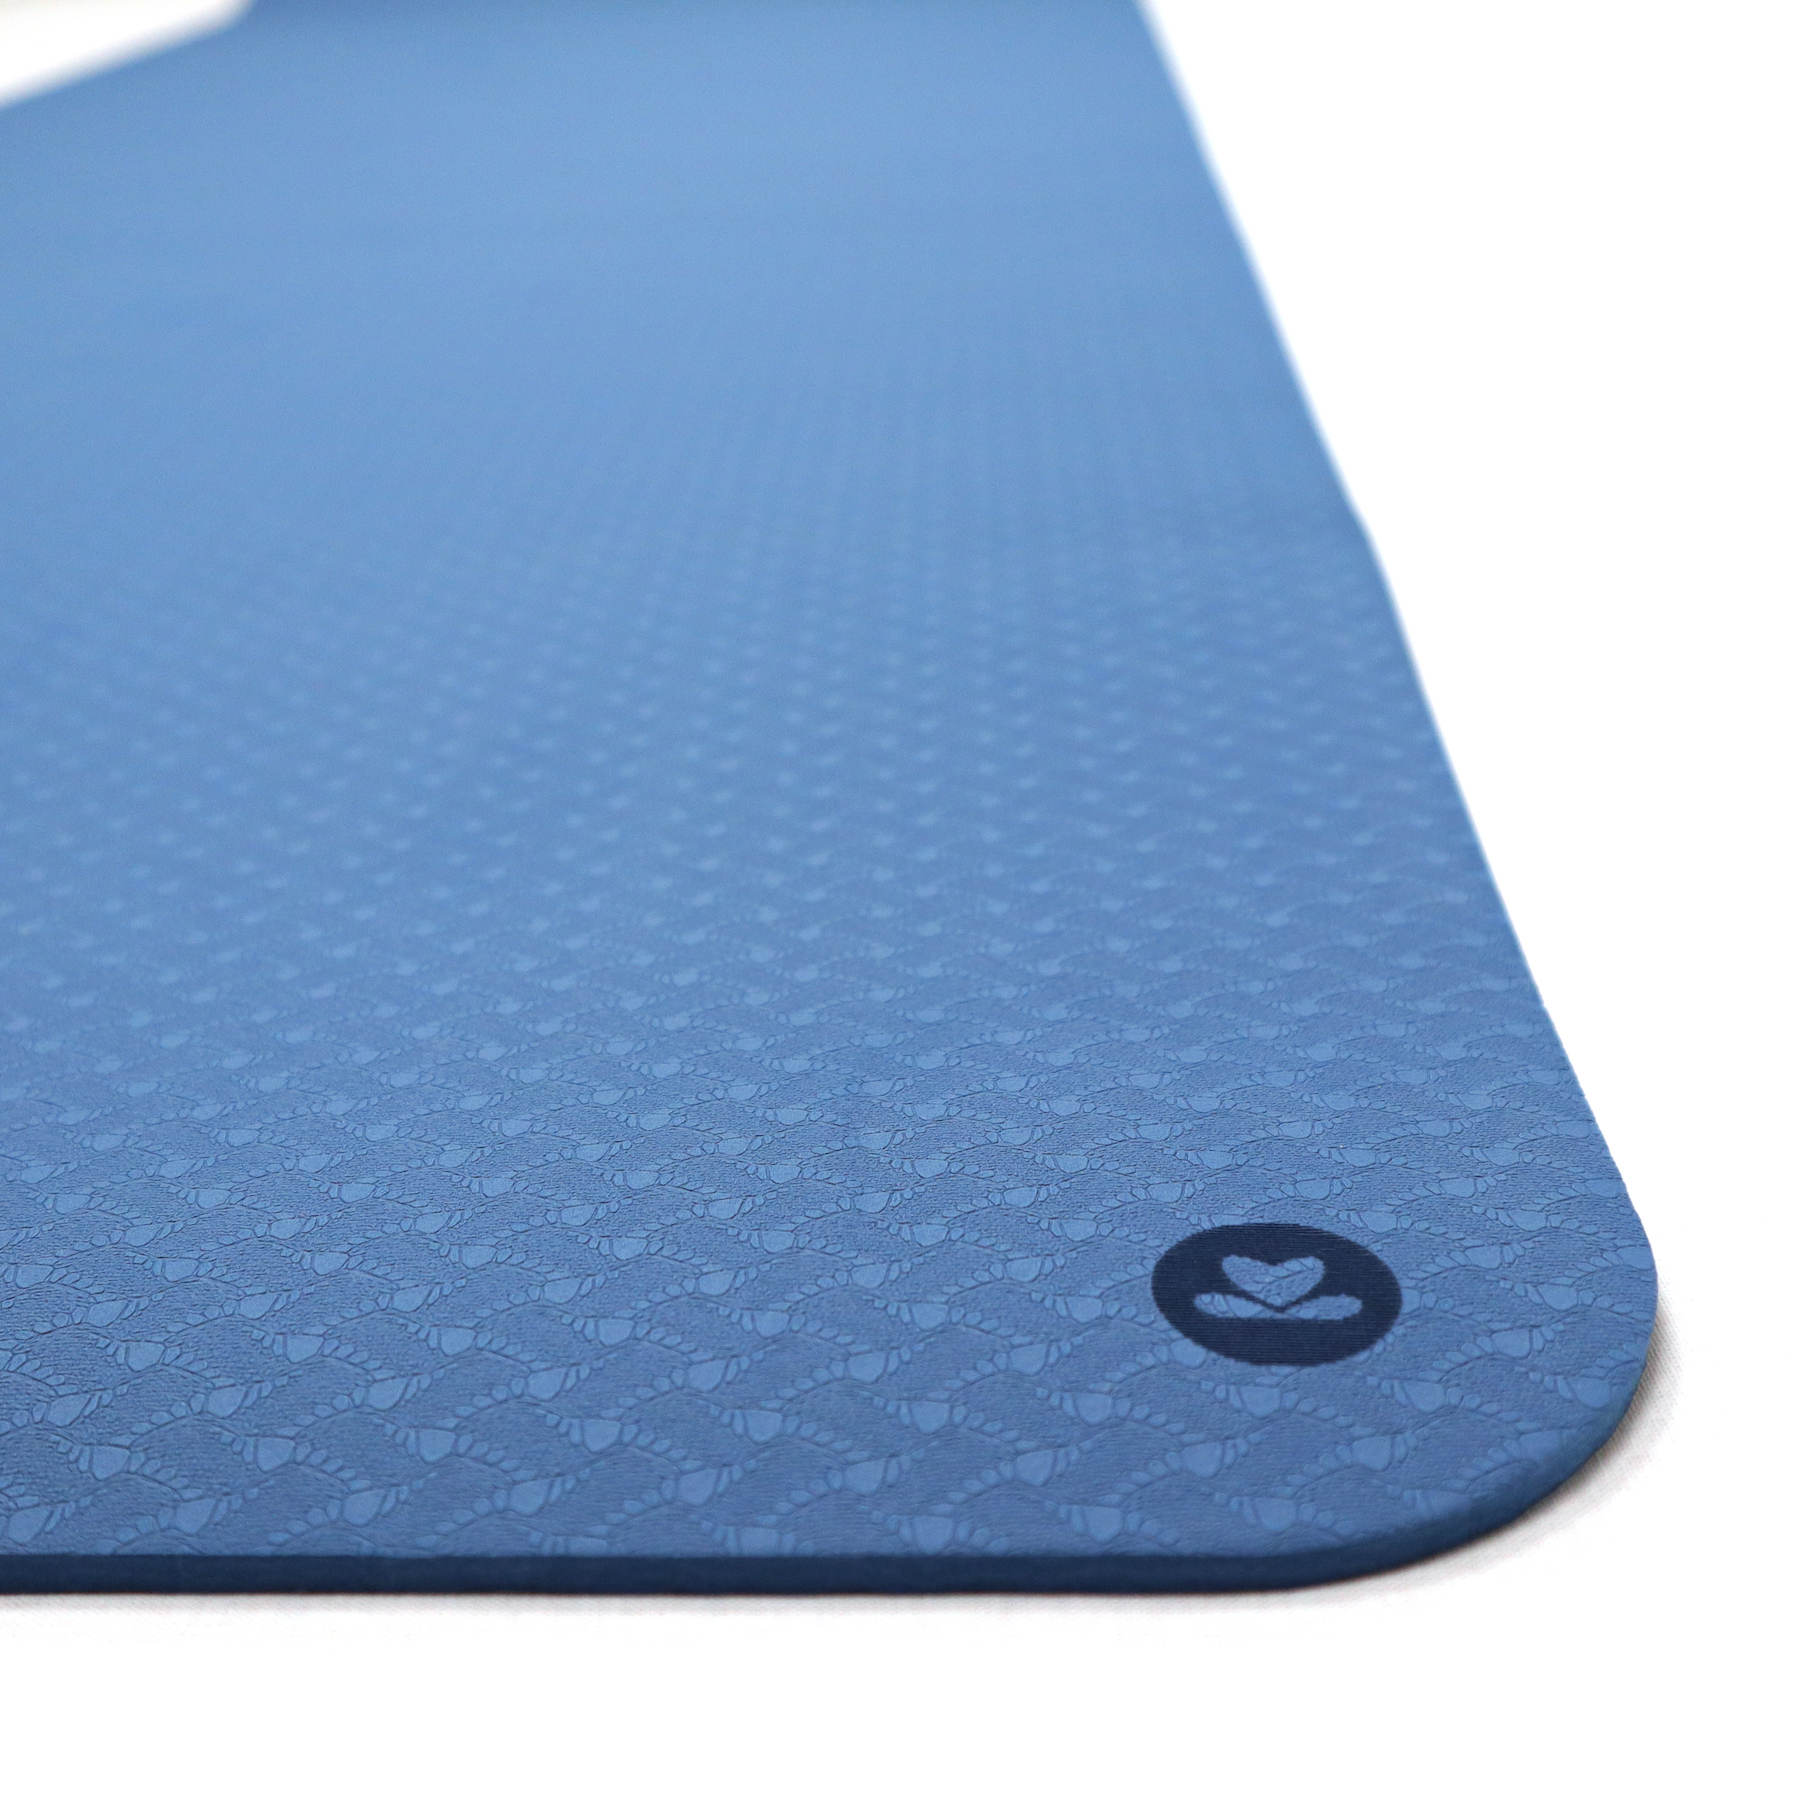 Tappetino da yoga in TPE blu navy, extra leggero, senza PVC, ecologico, spessore 6mm